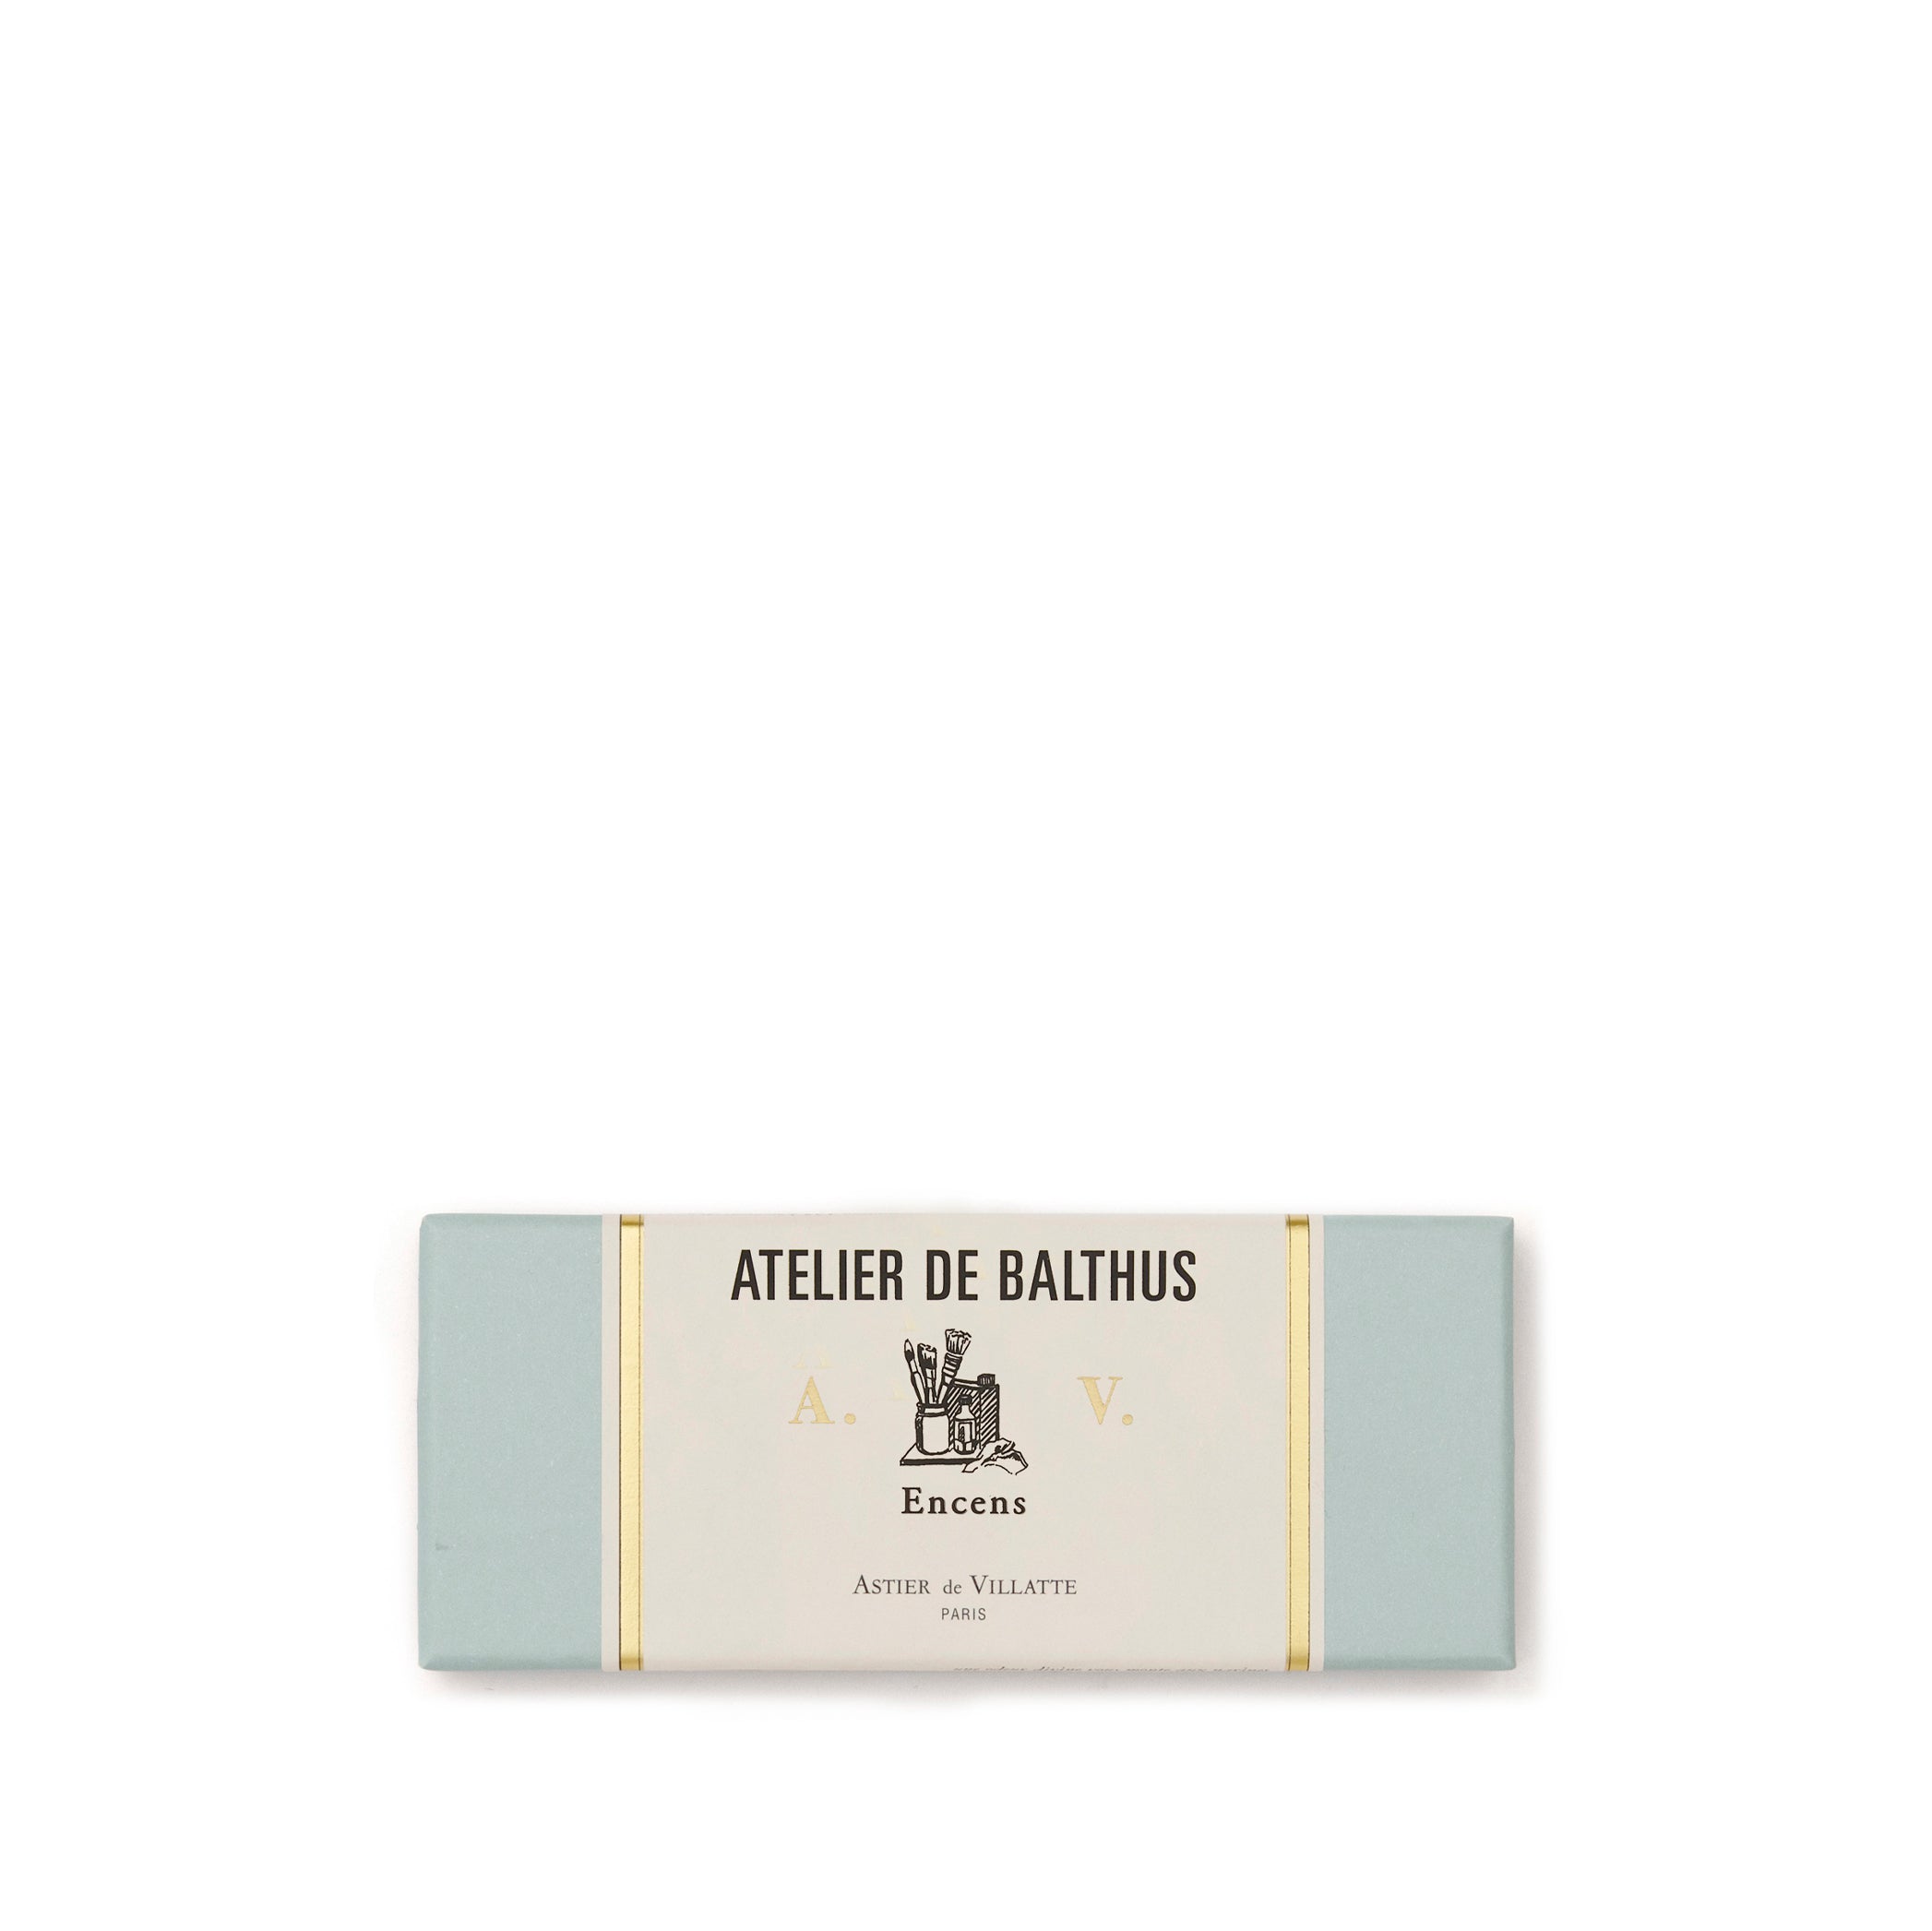 Atelier de Balthus Incense by Astier de Villatte